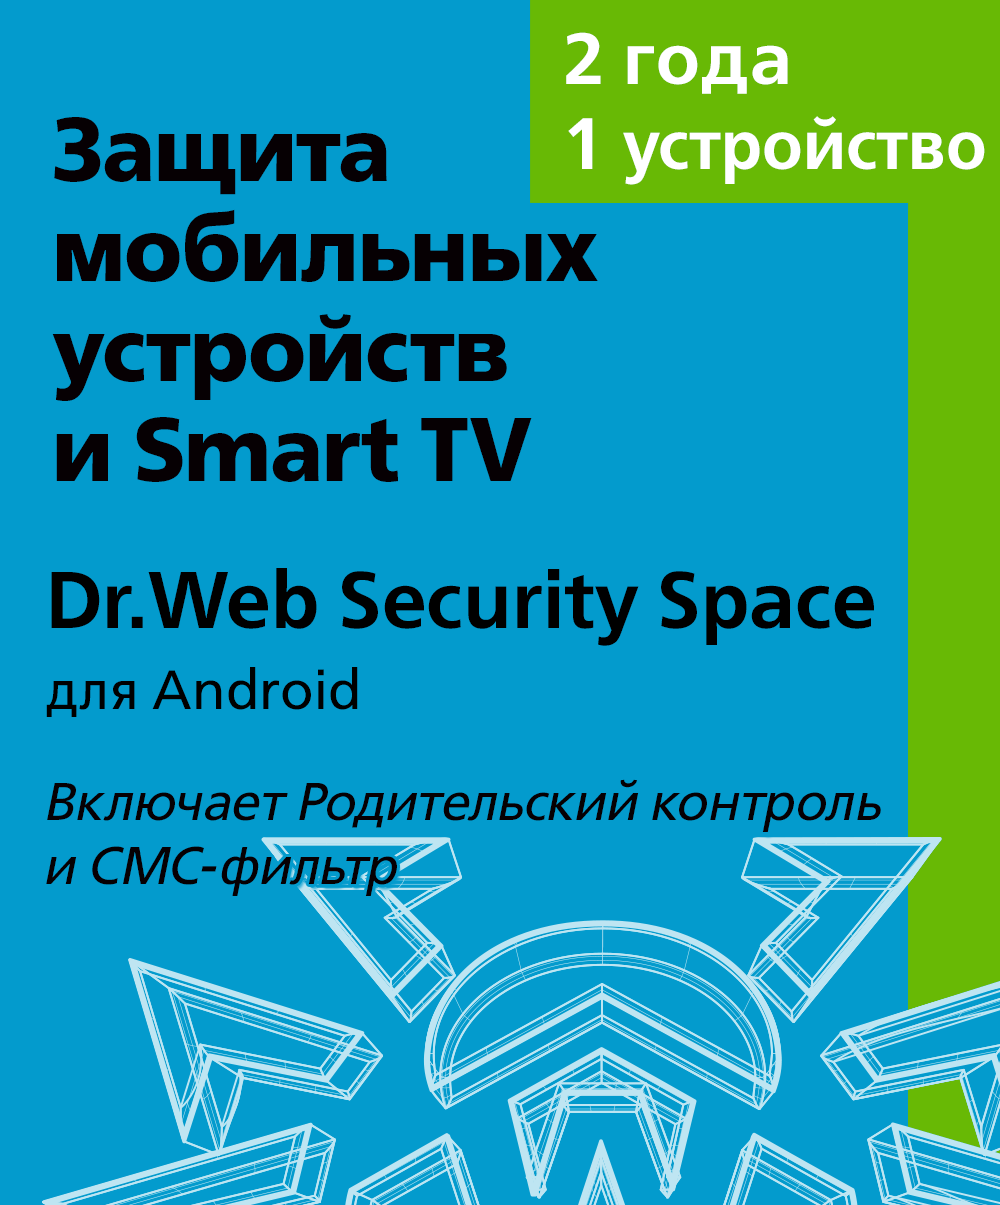 Цифровой продукт Dr.Web антивирус dr web security space 1 устройство на 1 год